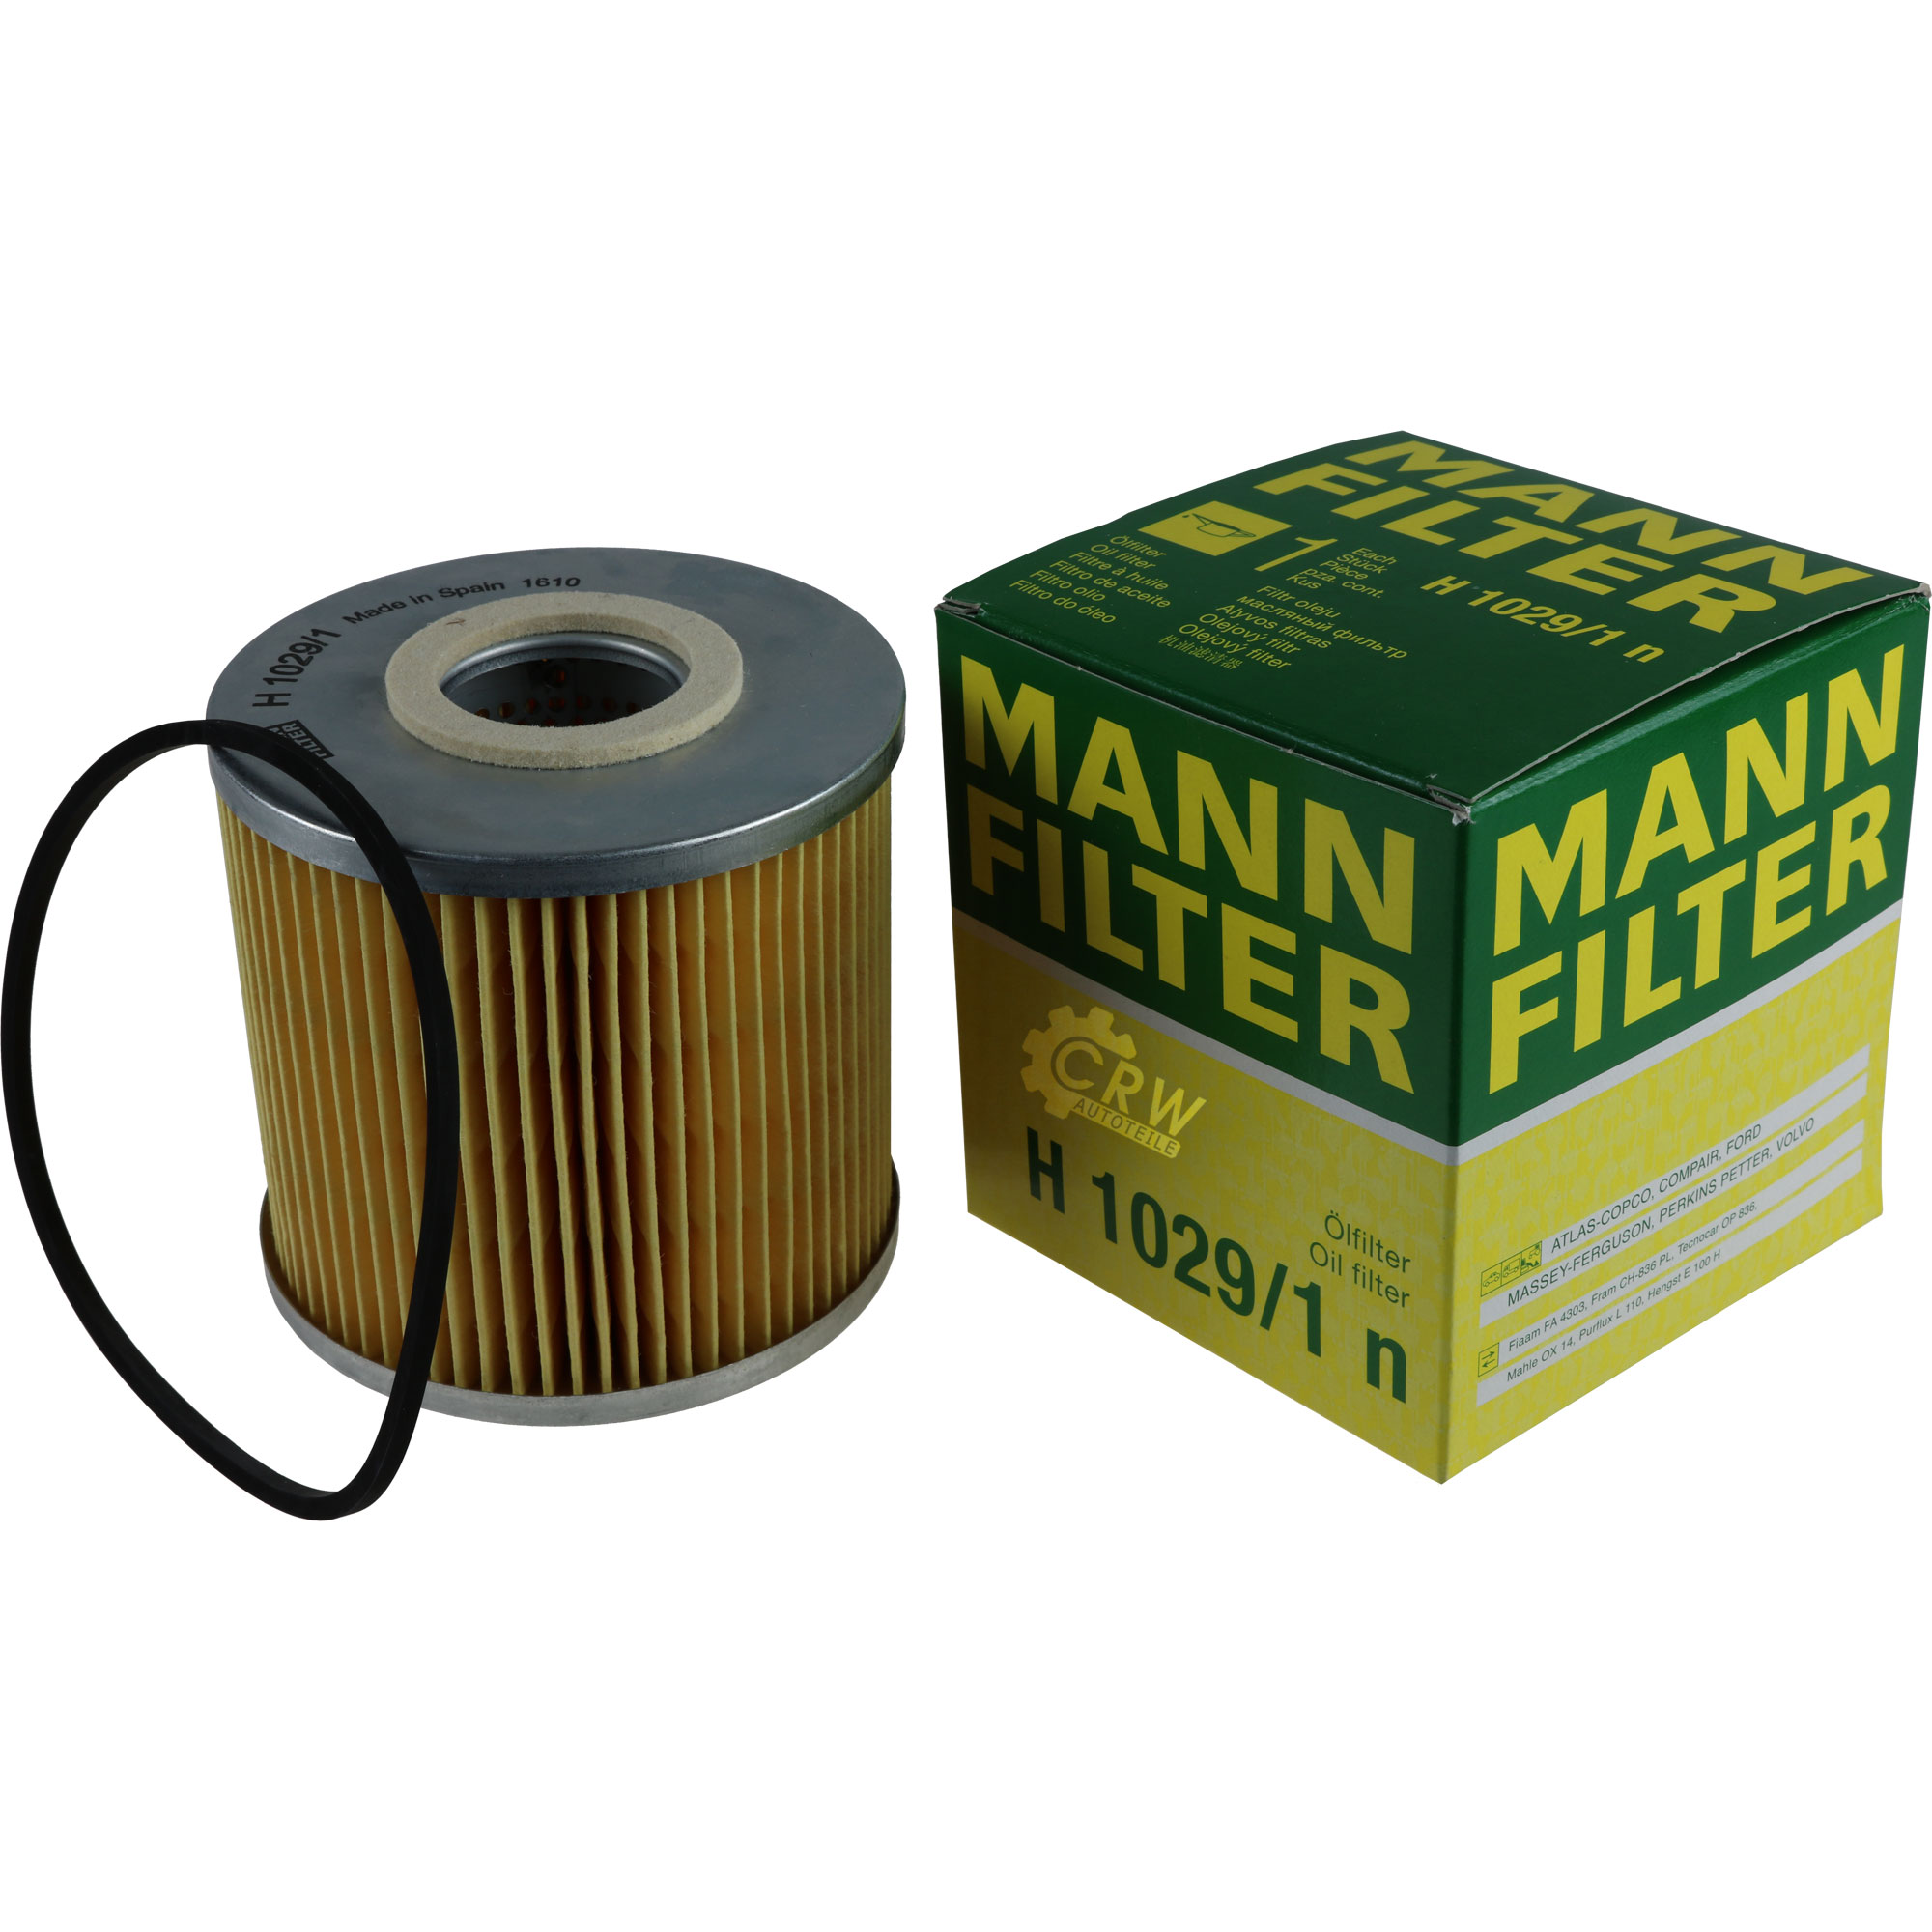 MANN-FILTER Ölfilter H 1029/1 n Oil Filter